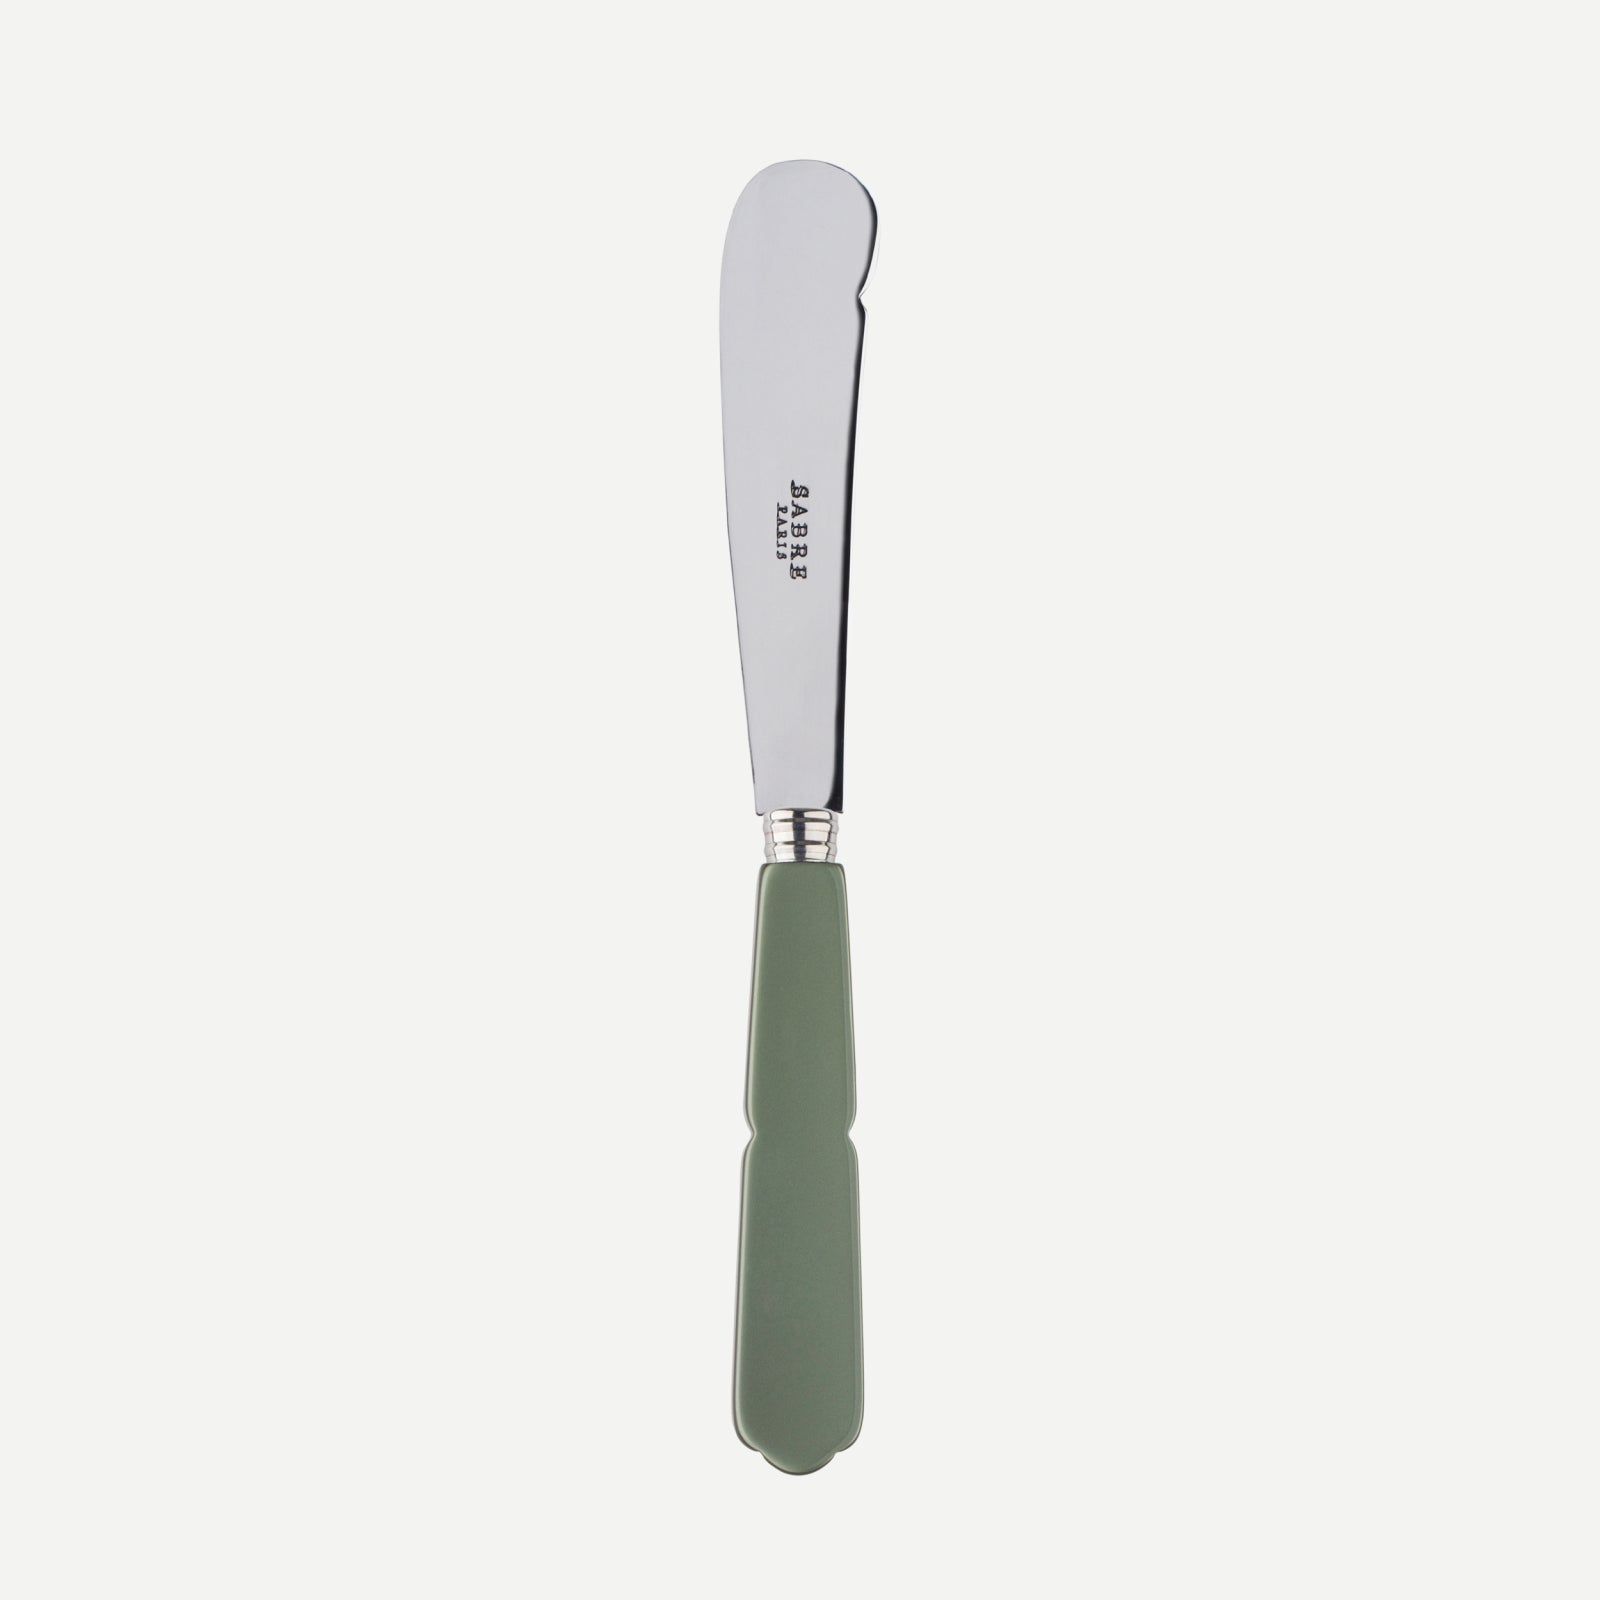 Butter knife - Gustave - Moss